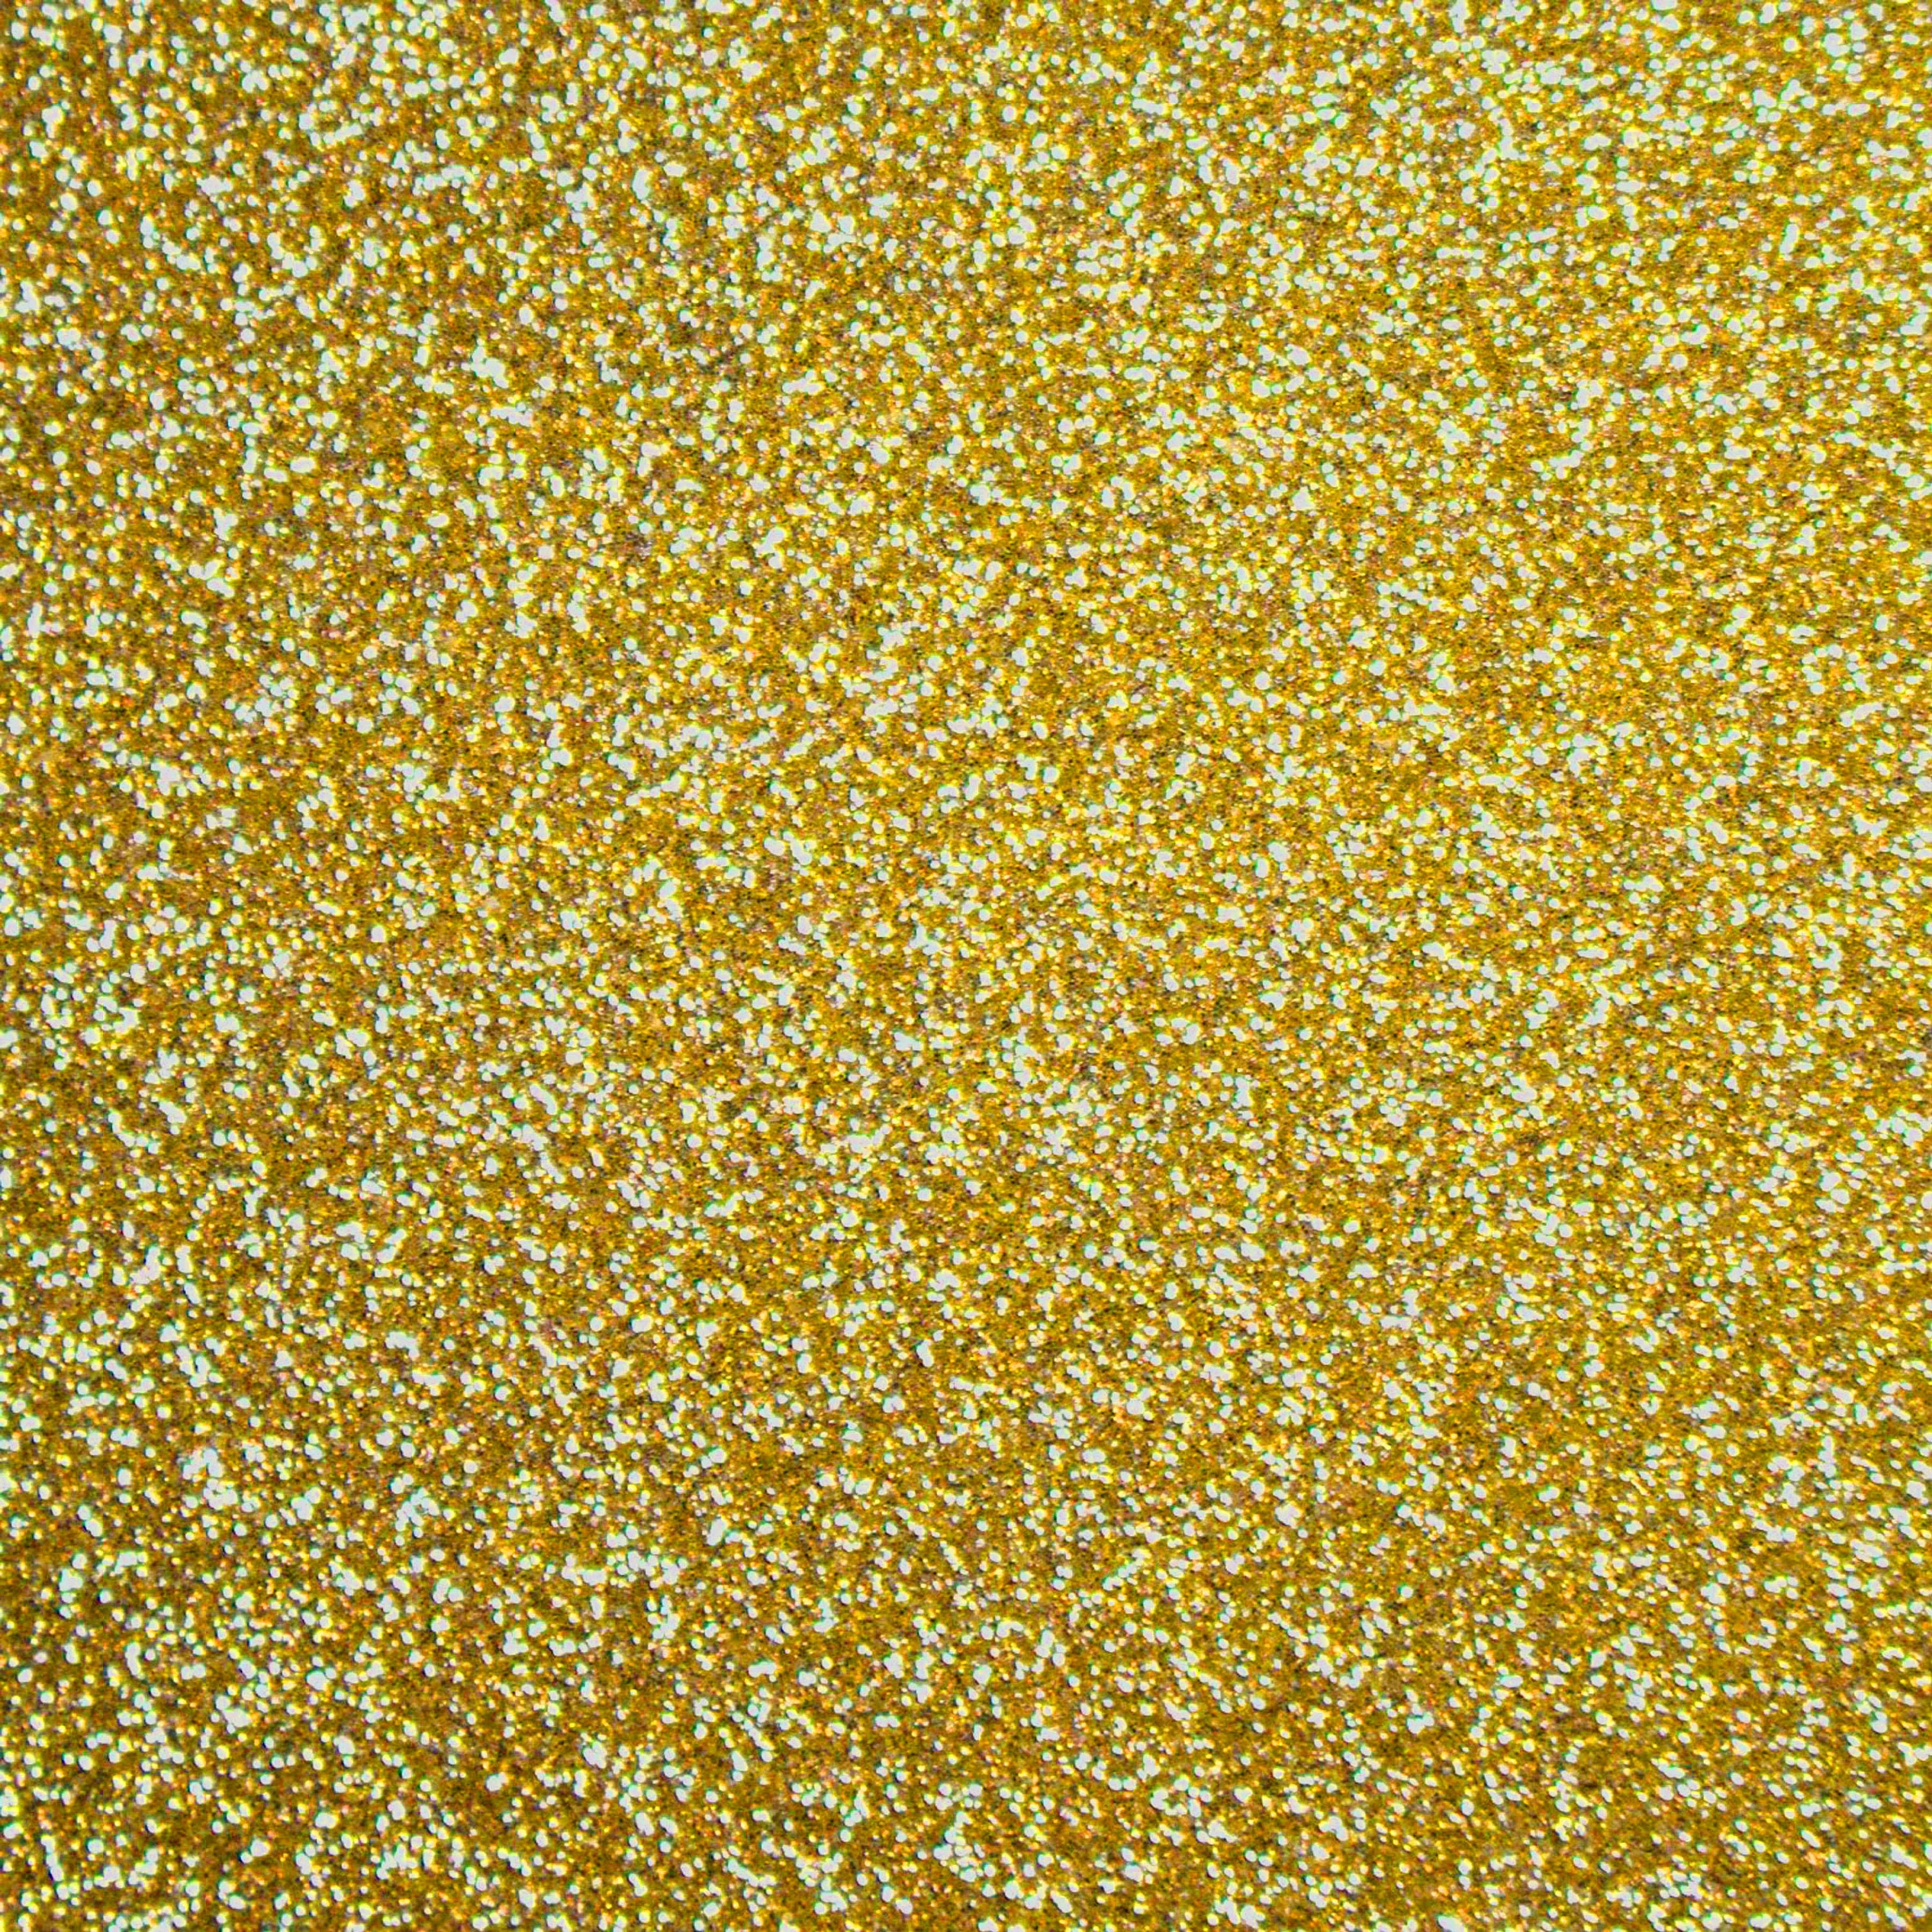 12 x 20 Gold Glitter HTV - Heat Transfer Vinyl Sheet Sheets